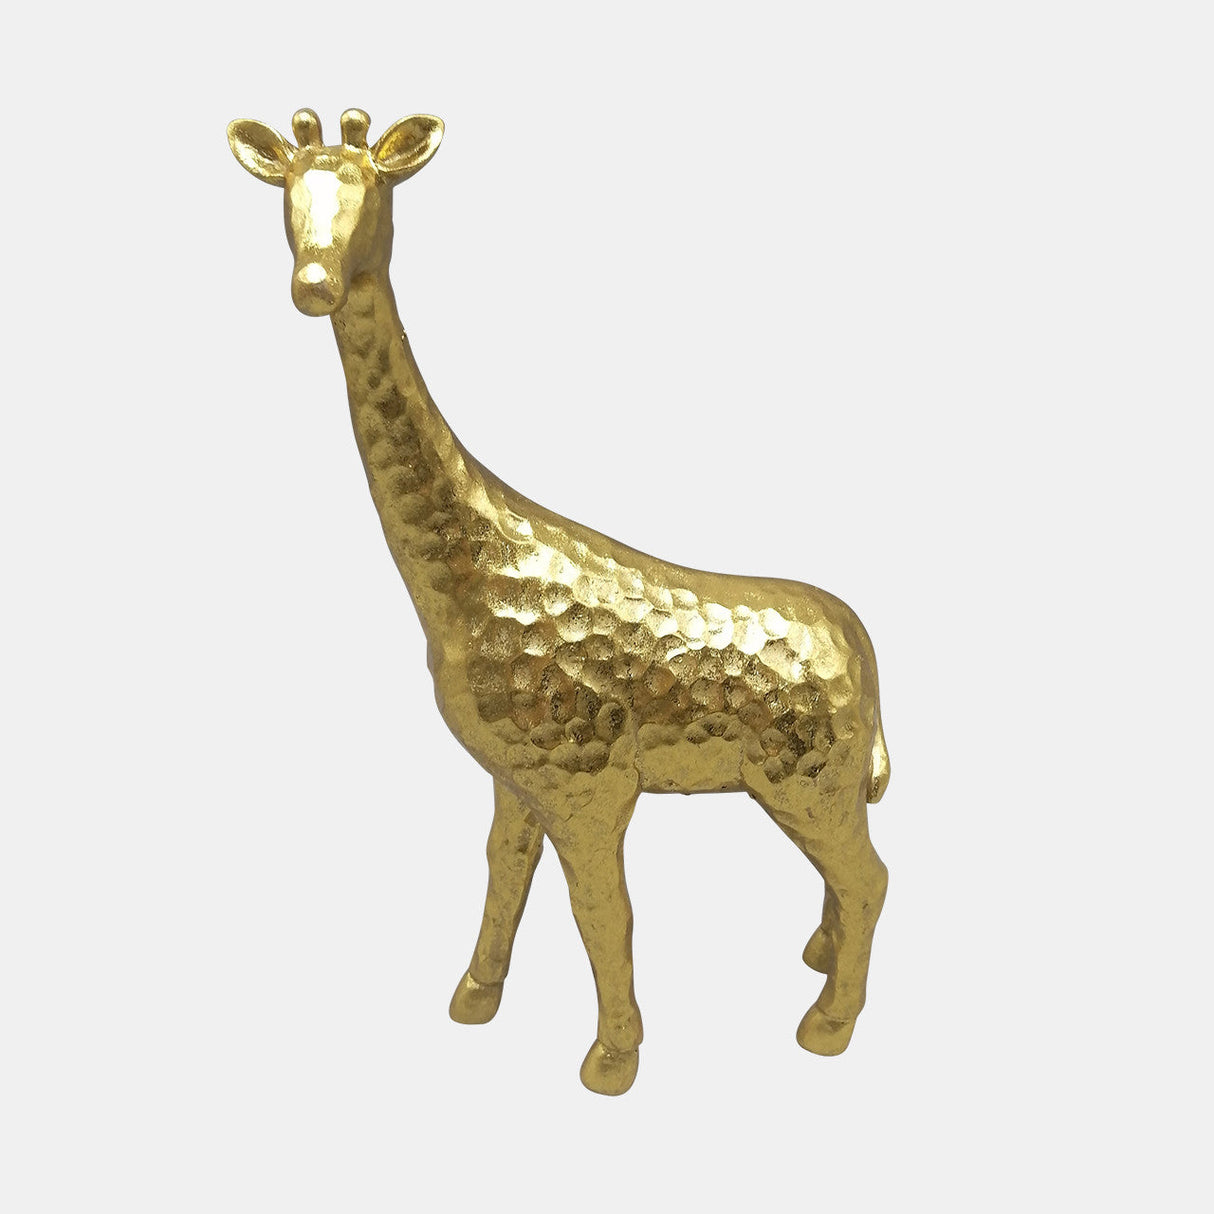 10" Standing Pretty Giraffe, Gold